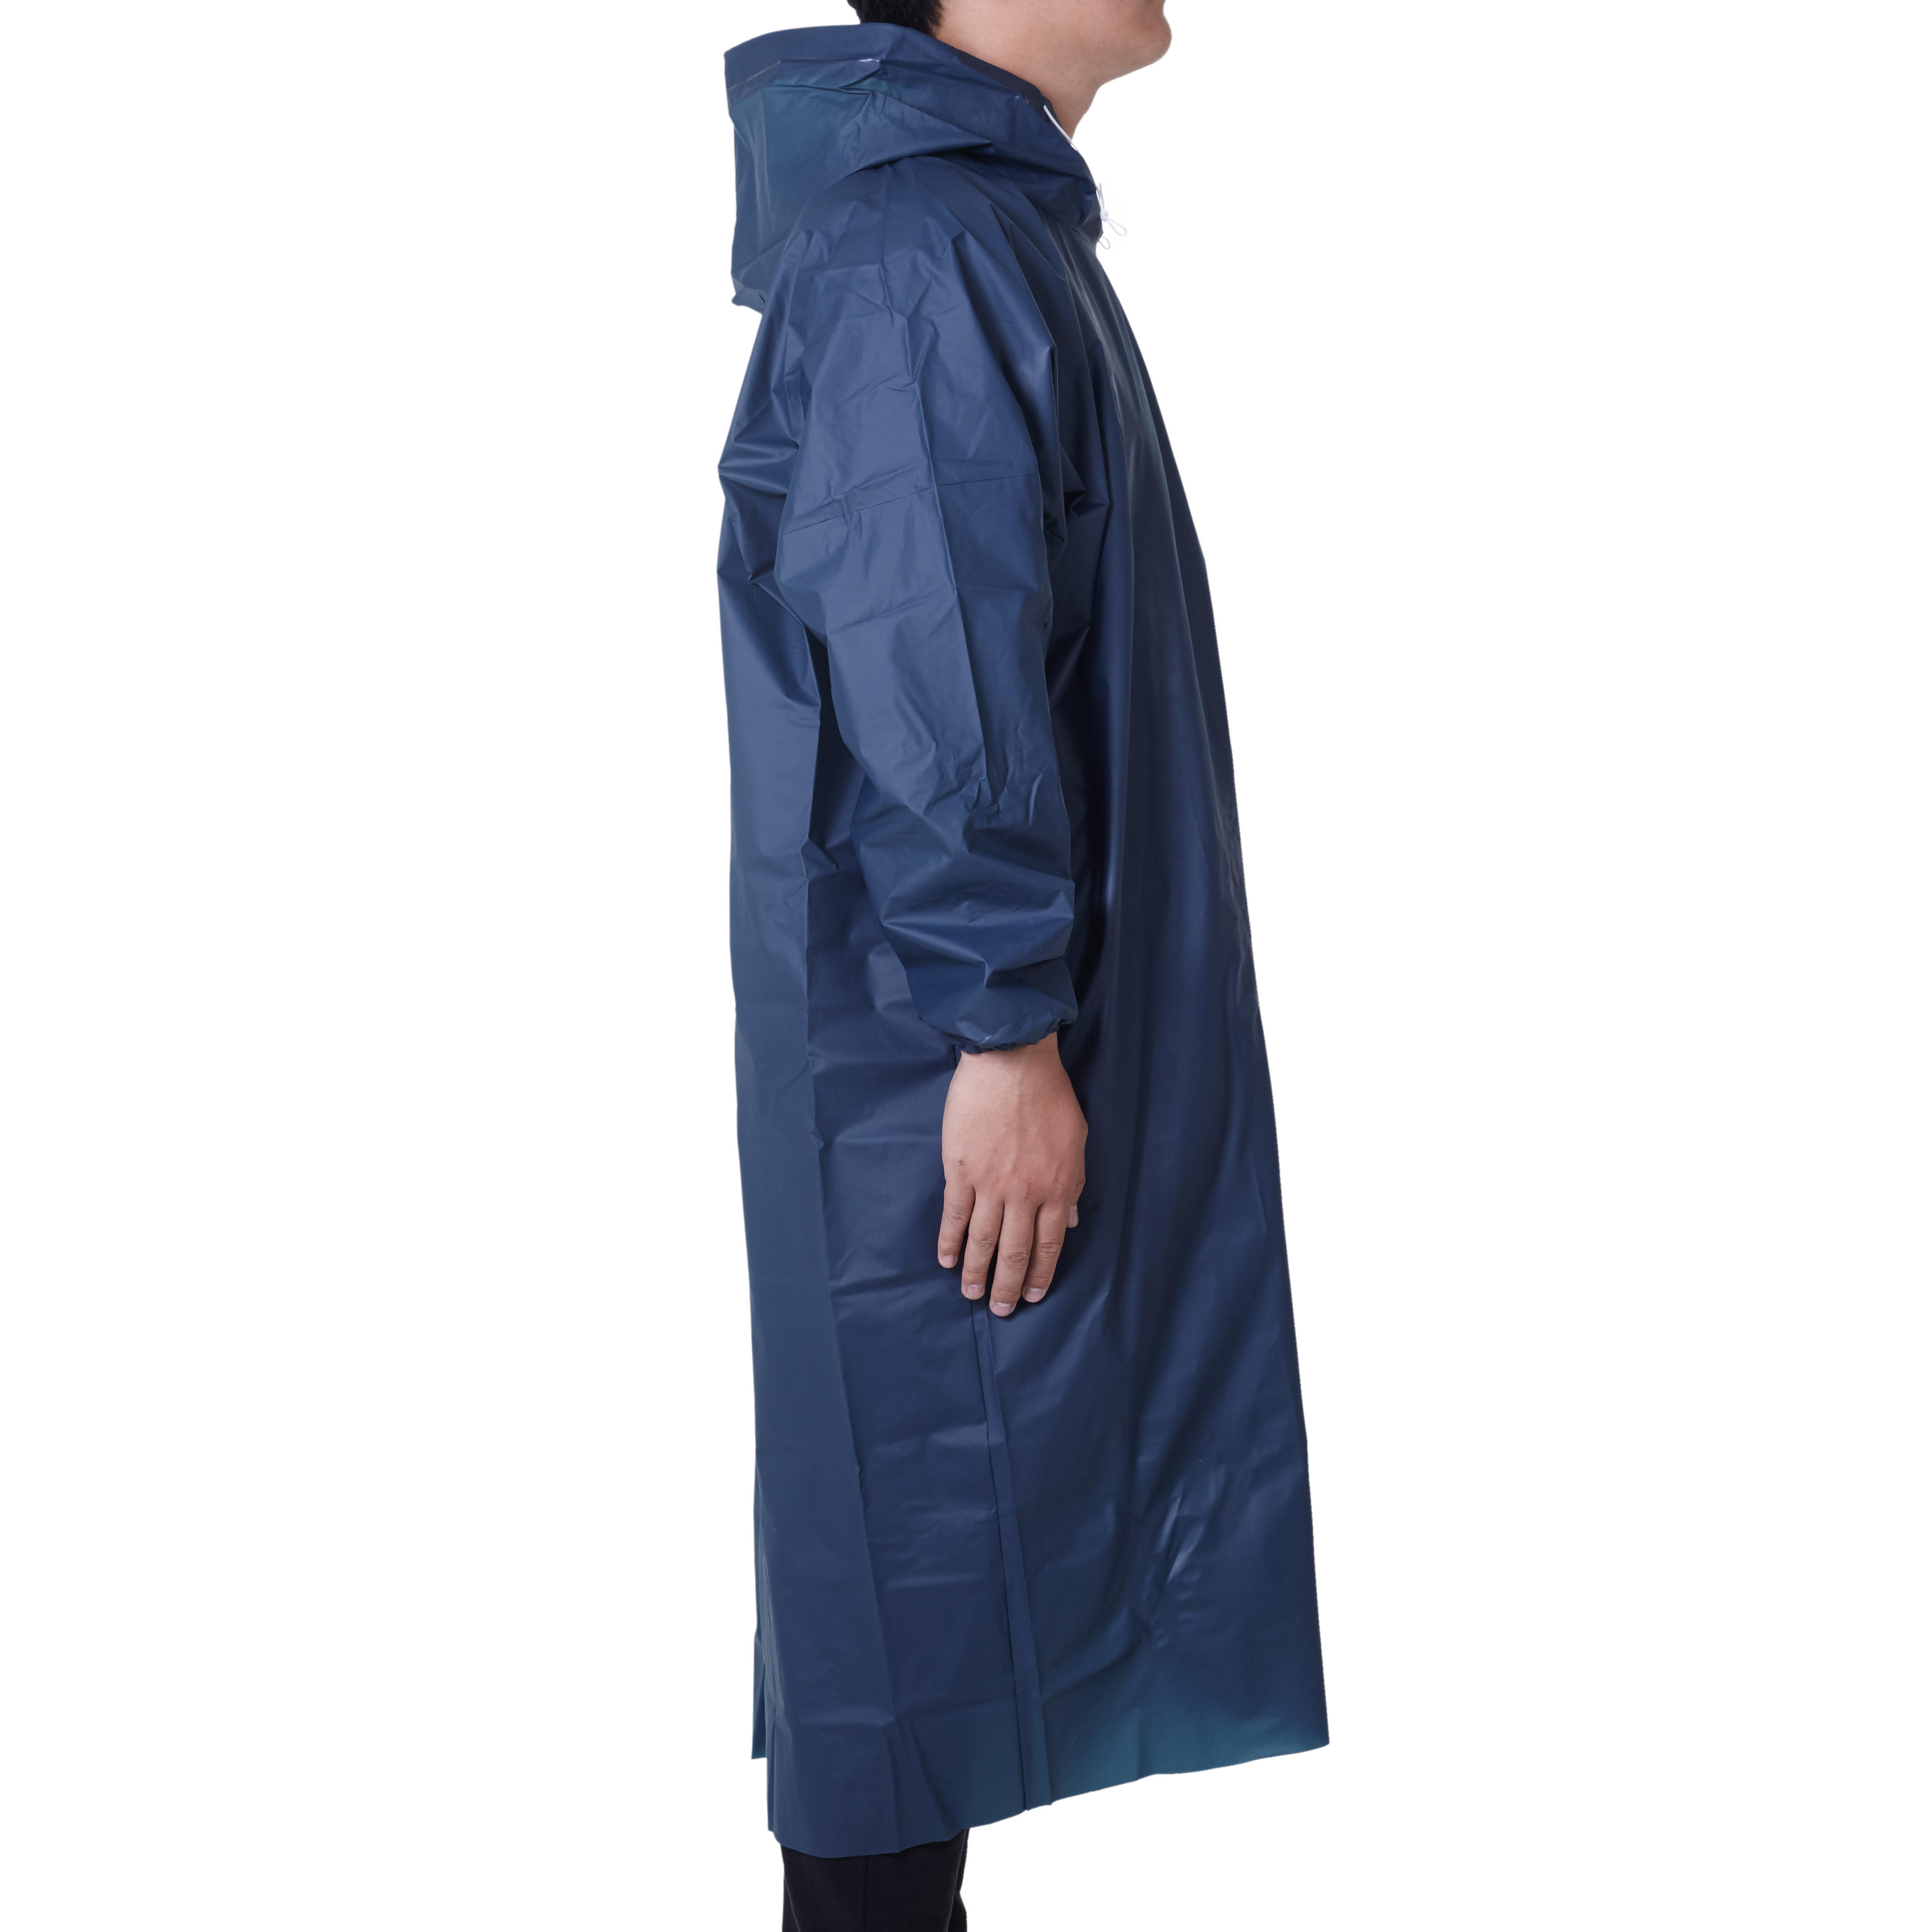 caperlan raincoat